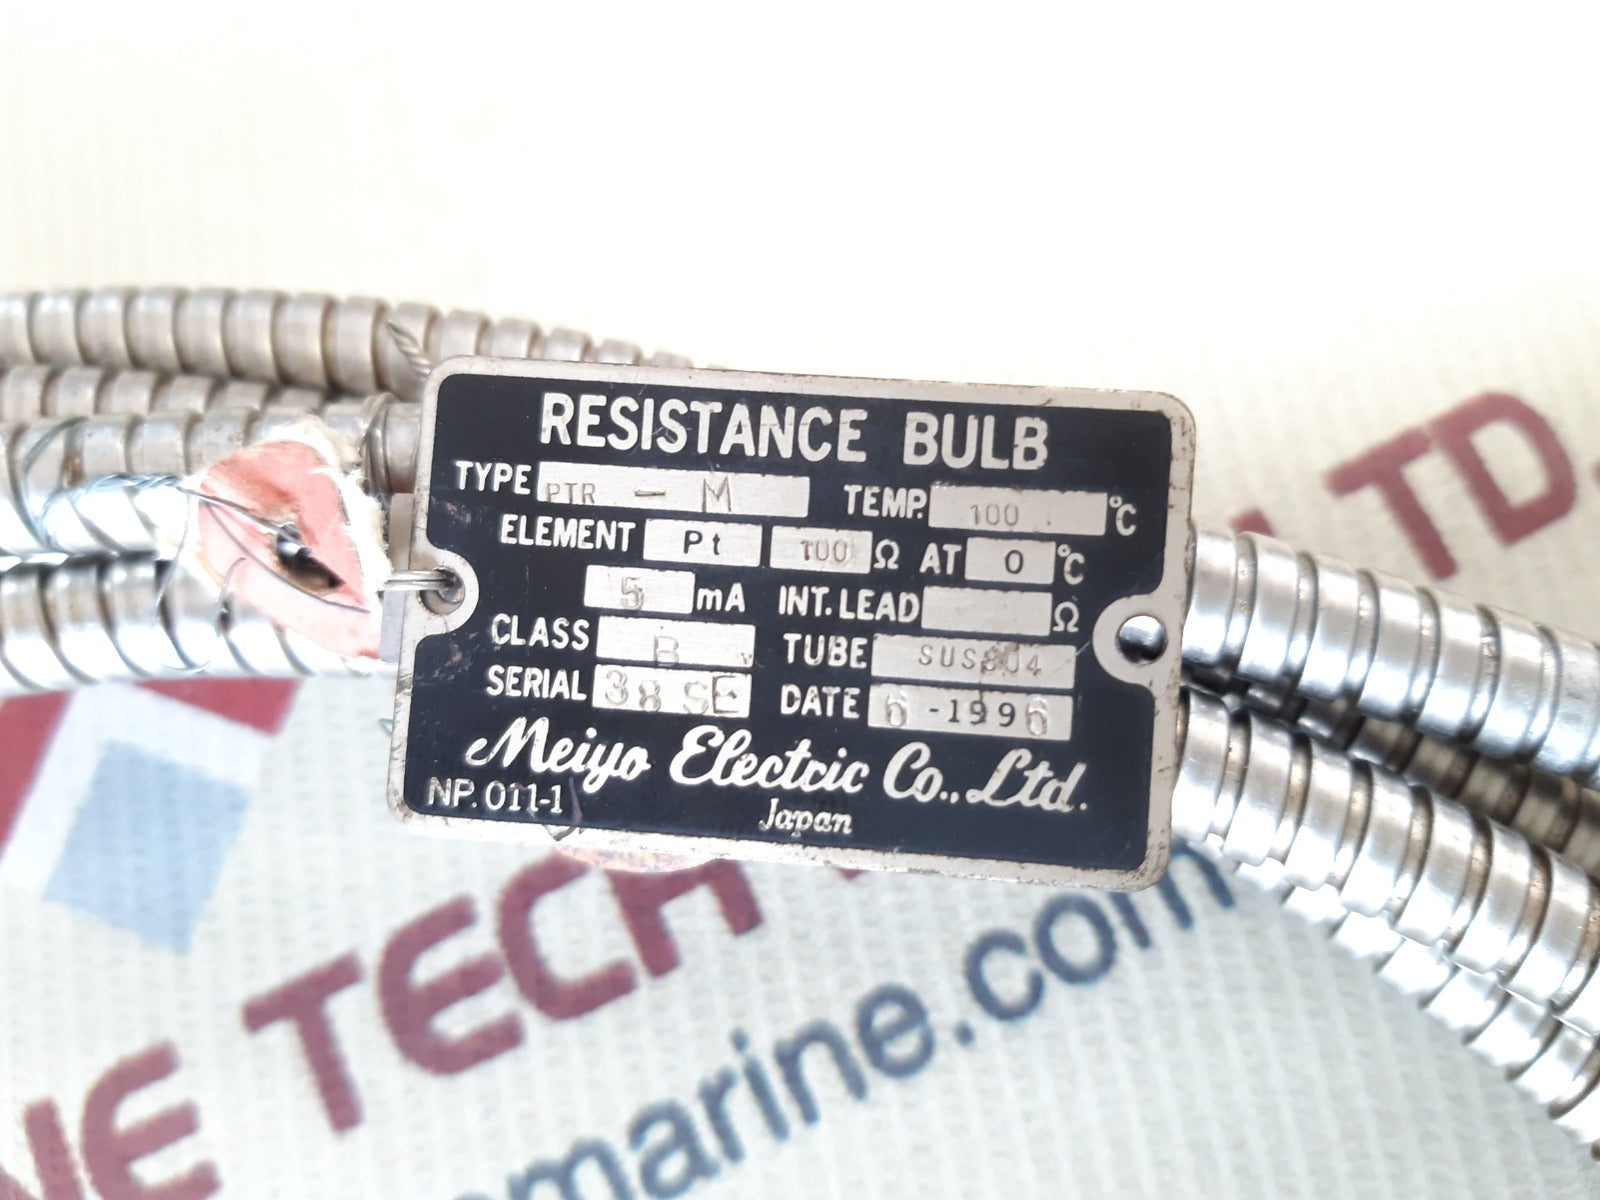 Meiyo electric ptr-m resistance bulb